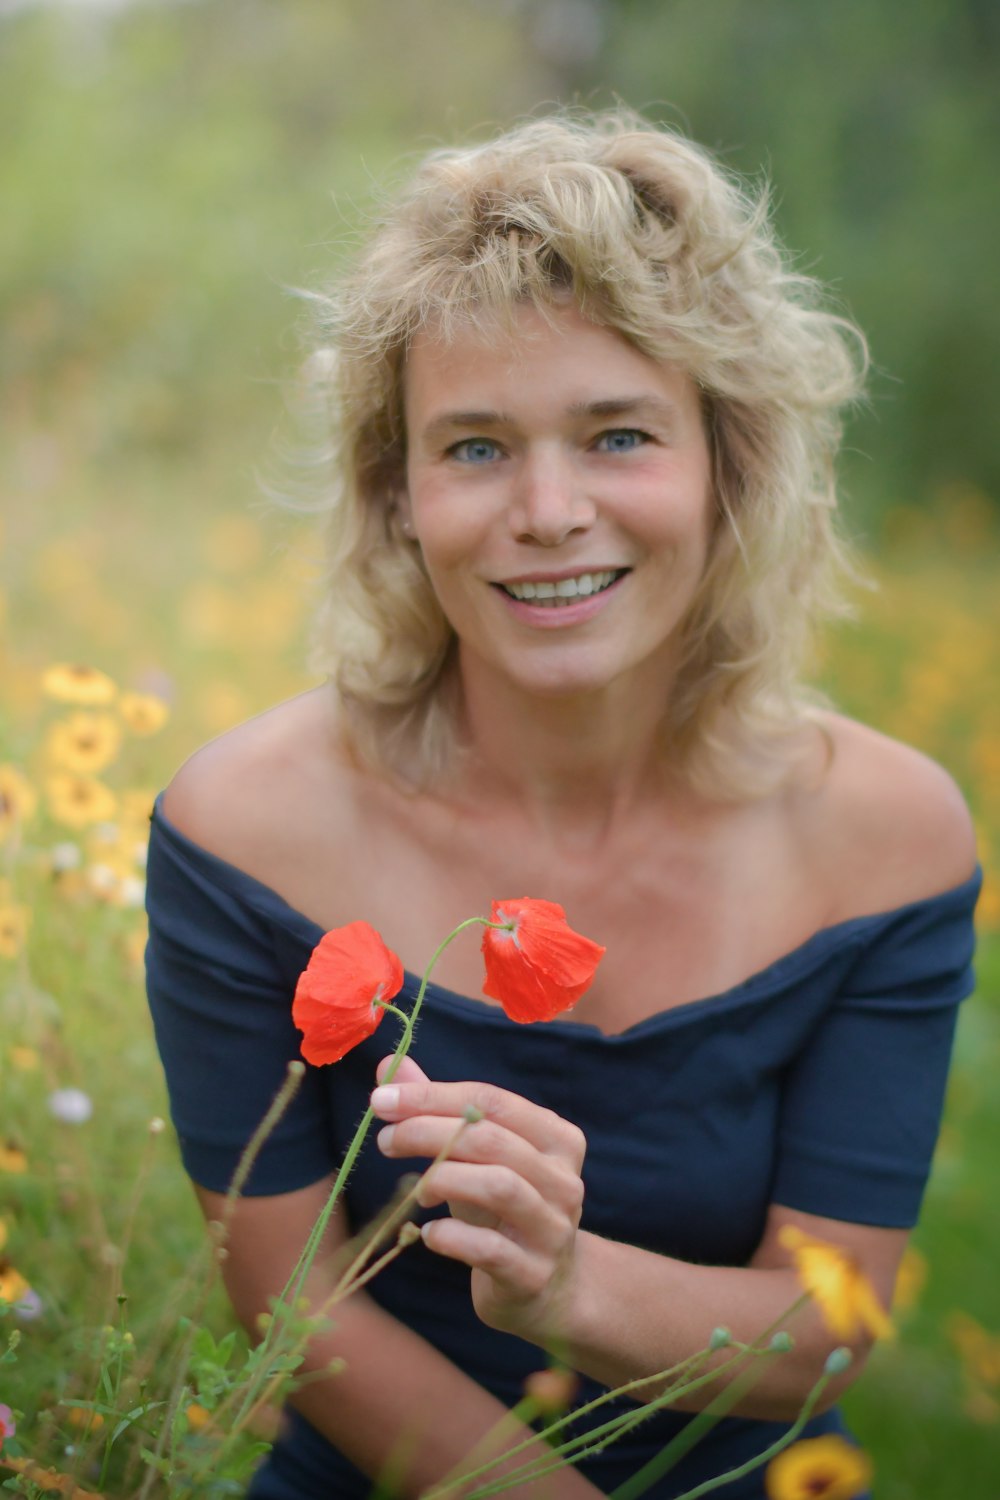 a woman sitting in a field of flowers